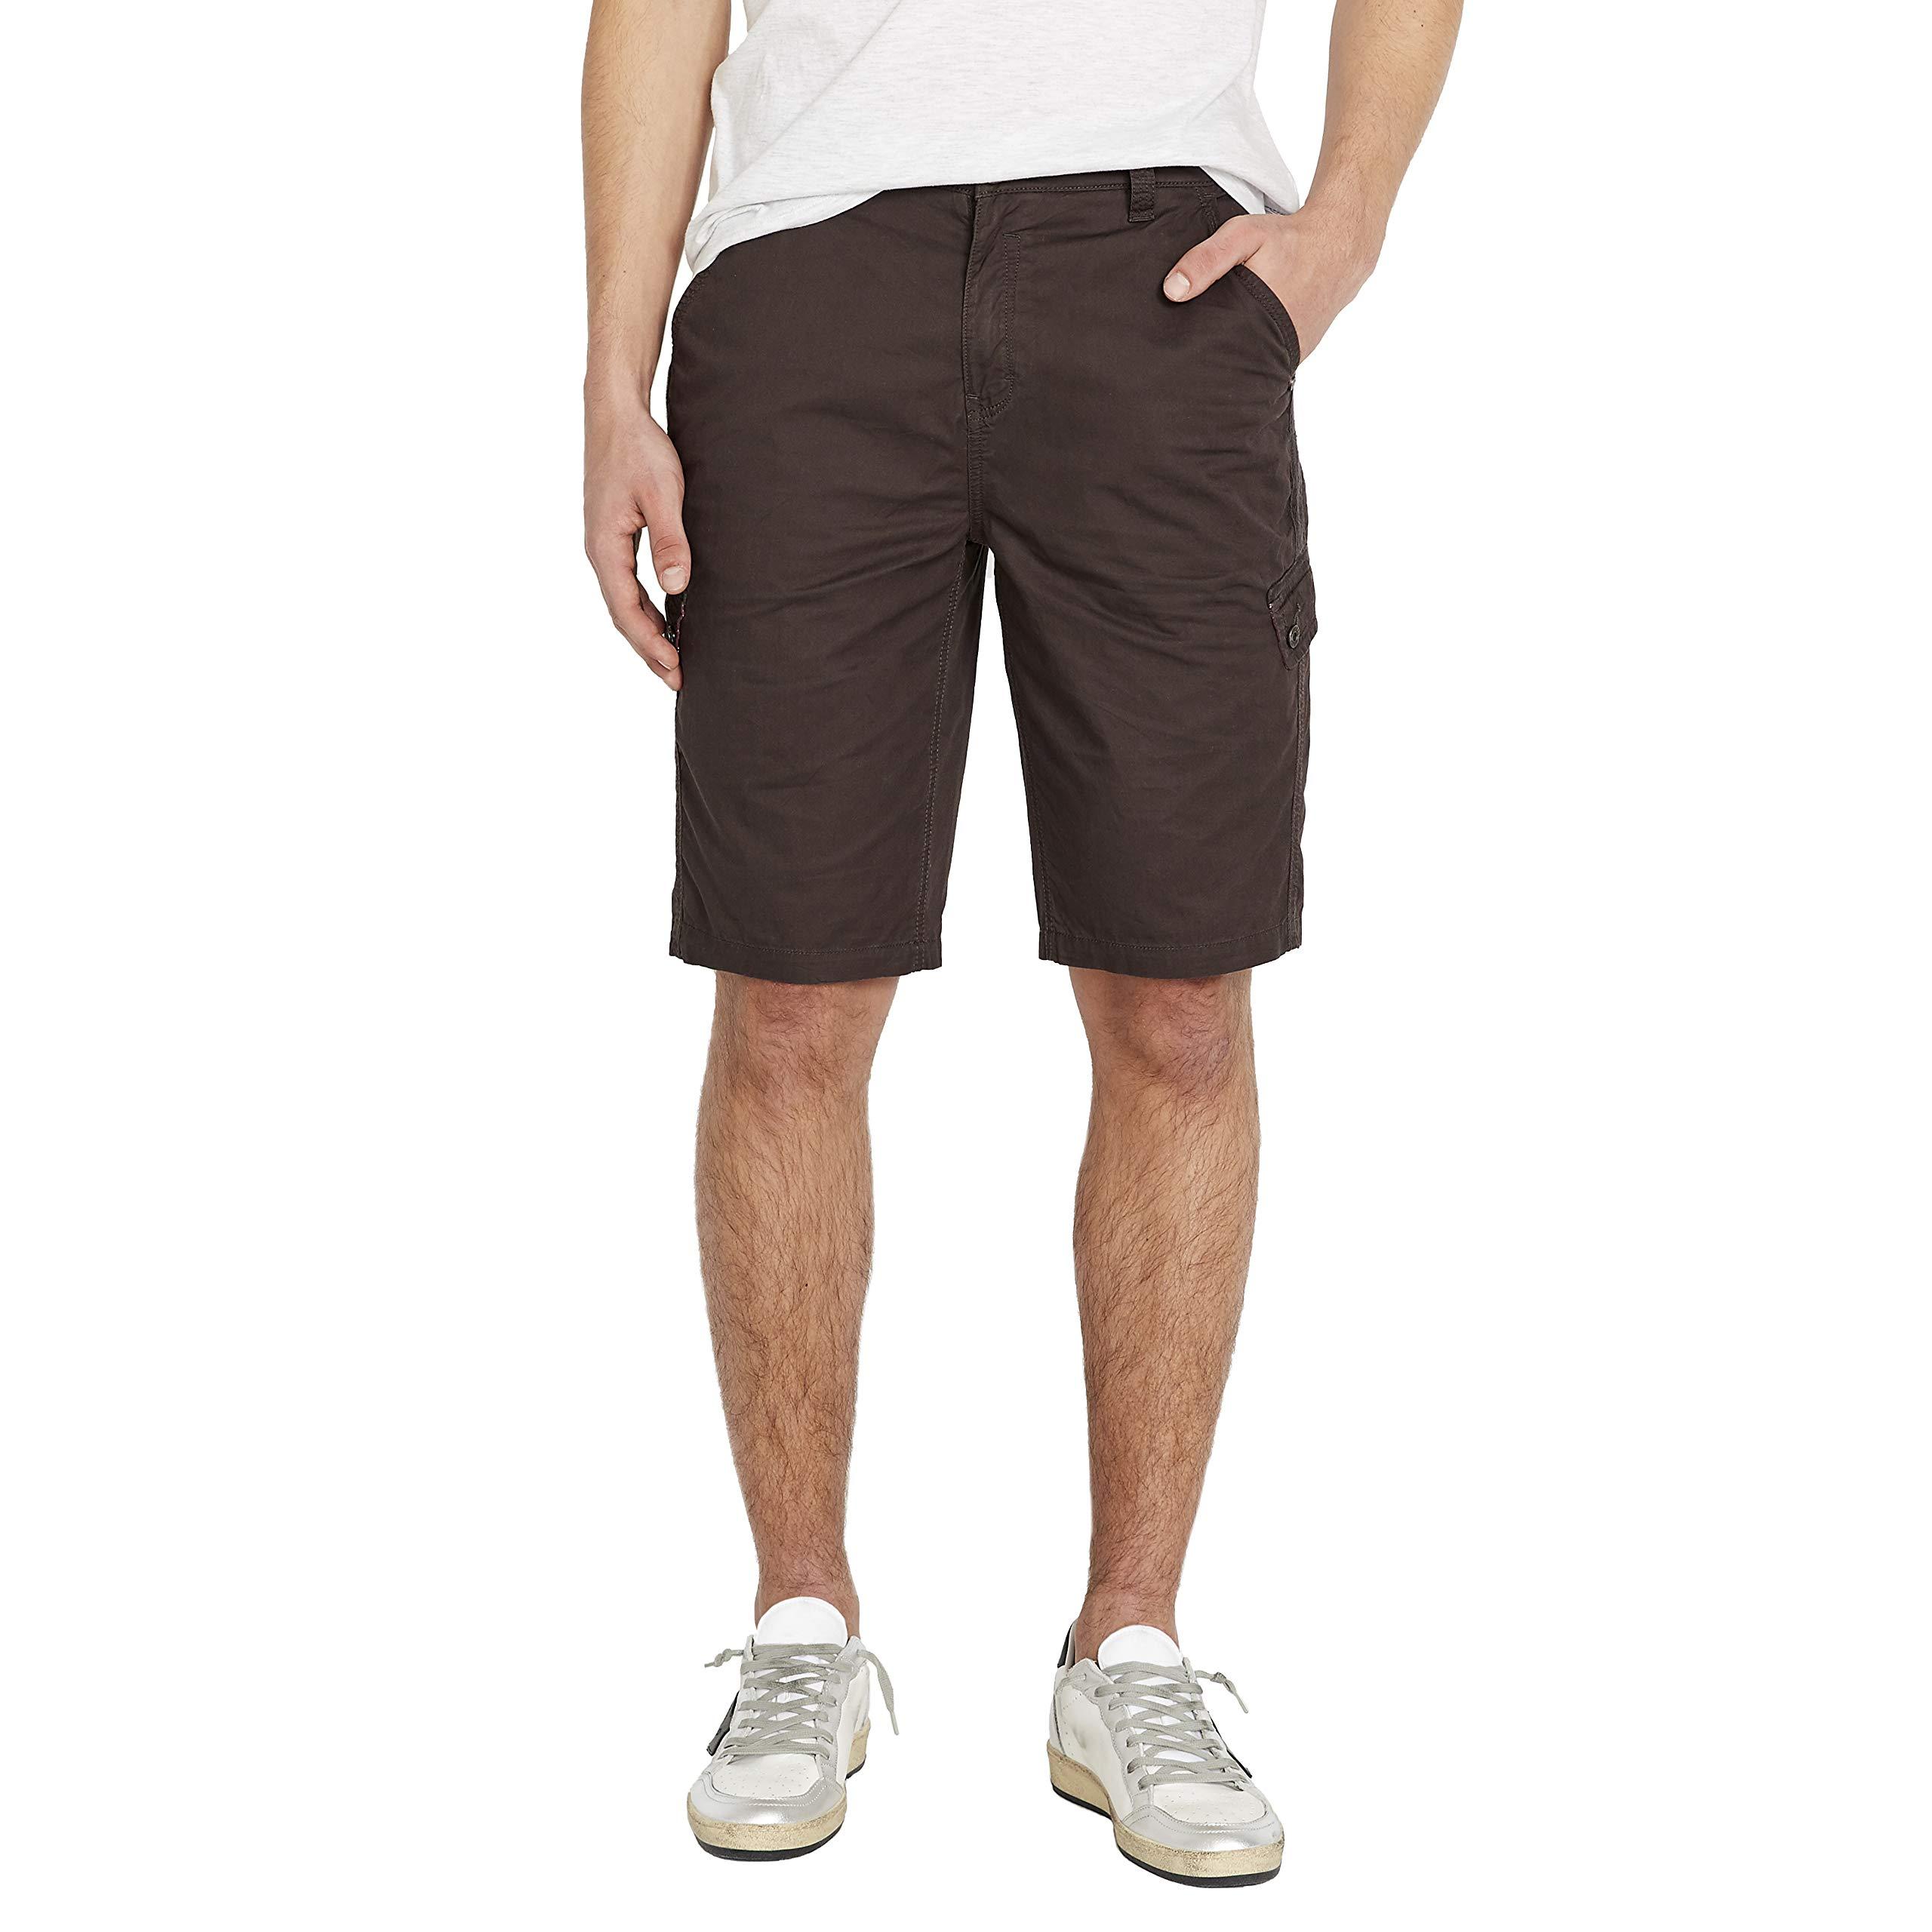 Buffalo David Bitton Cotton Cargo Shorts in Charcoal (Gray) for Men - Lyst